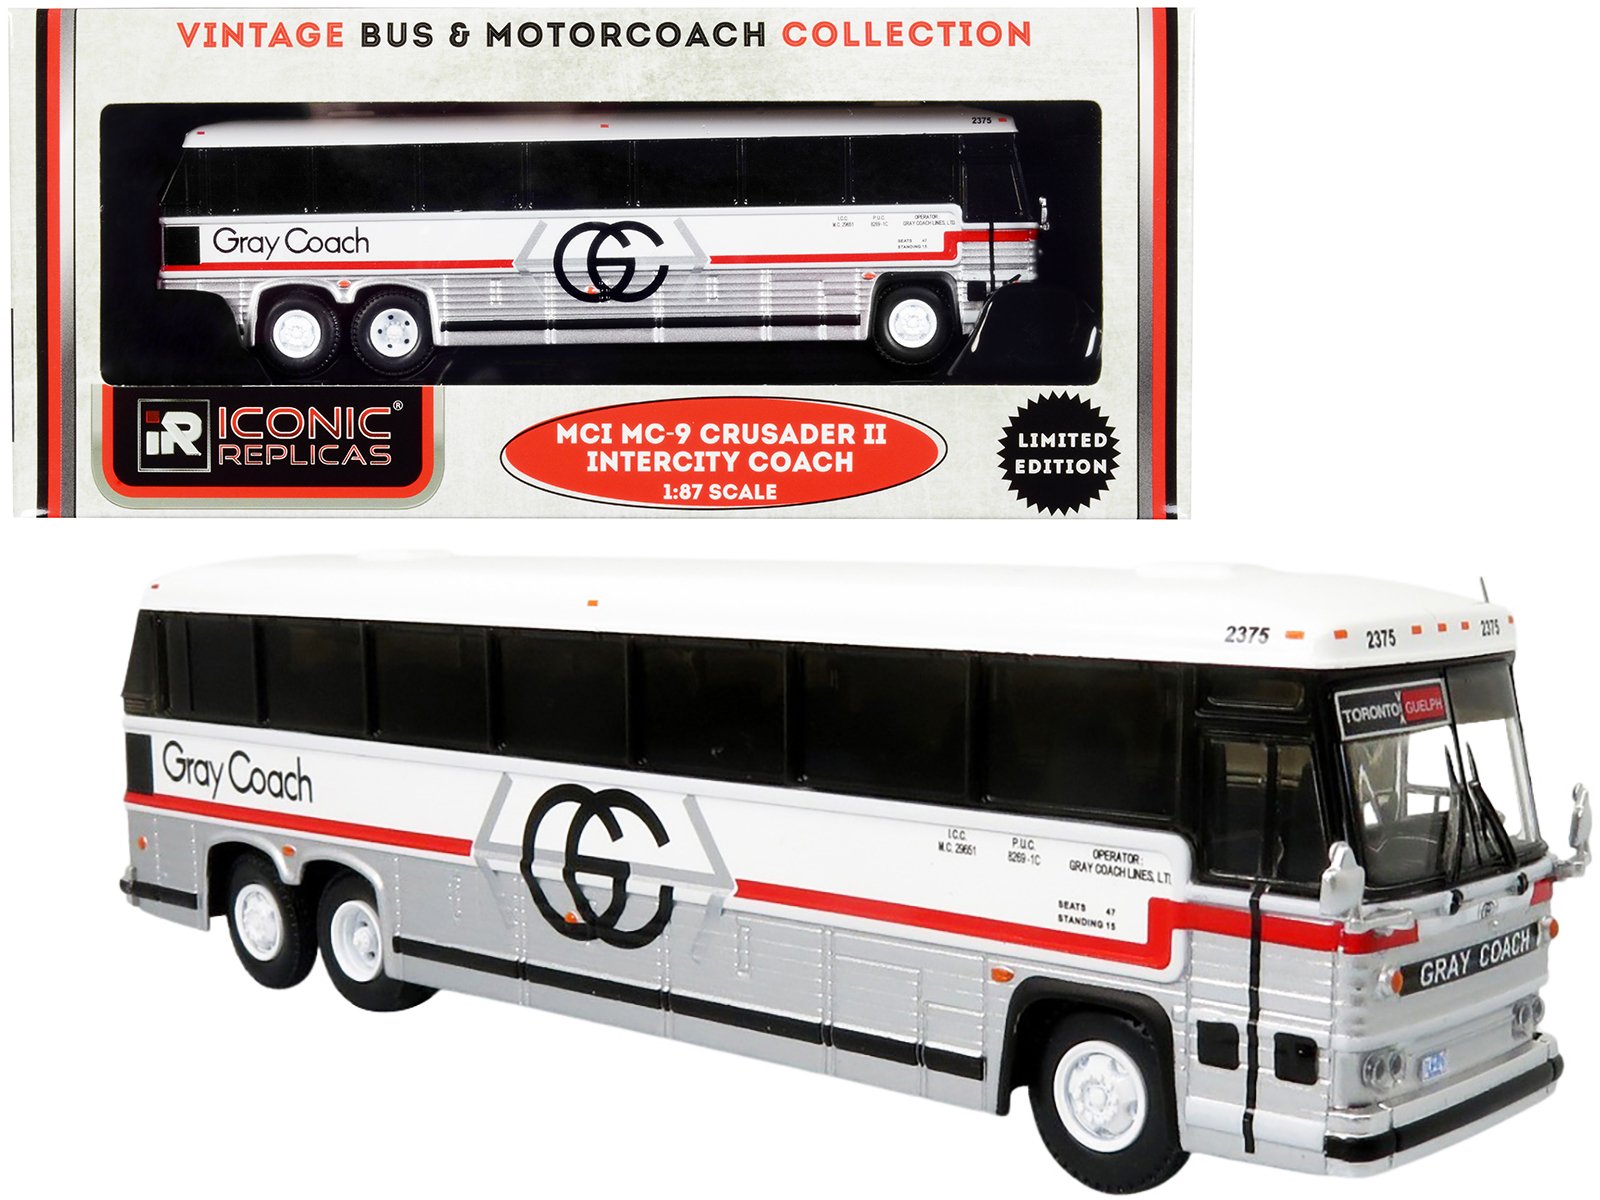 Iconic Replicas 1980 MCI MC-9 Crusader II Intercity Coach Bus "Toronto - Guelph" (Canada) "Gray Coach" 1/87 HO Diecast Model by Iconic Replicas